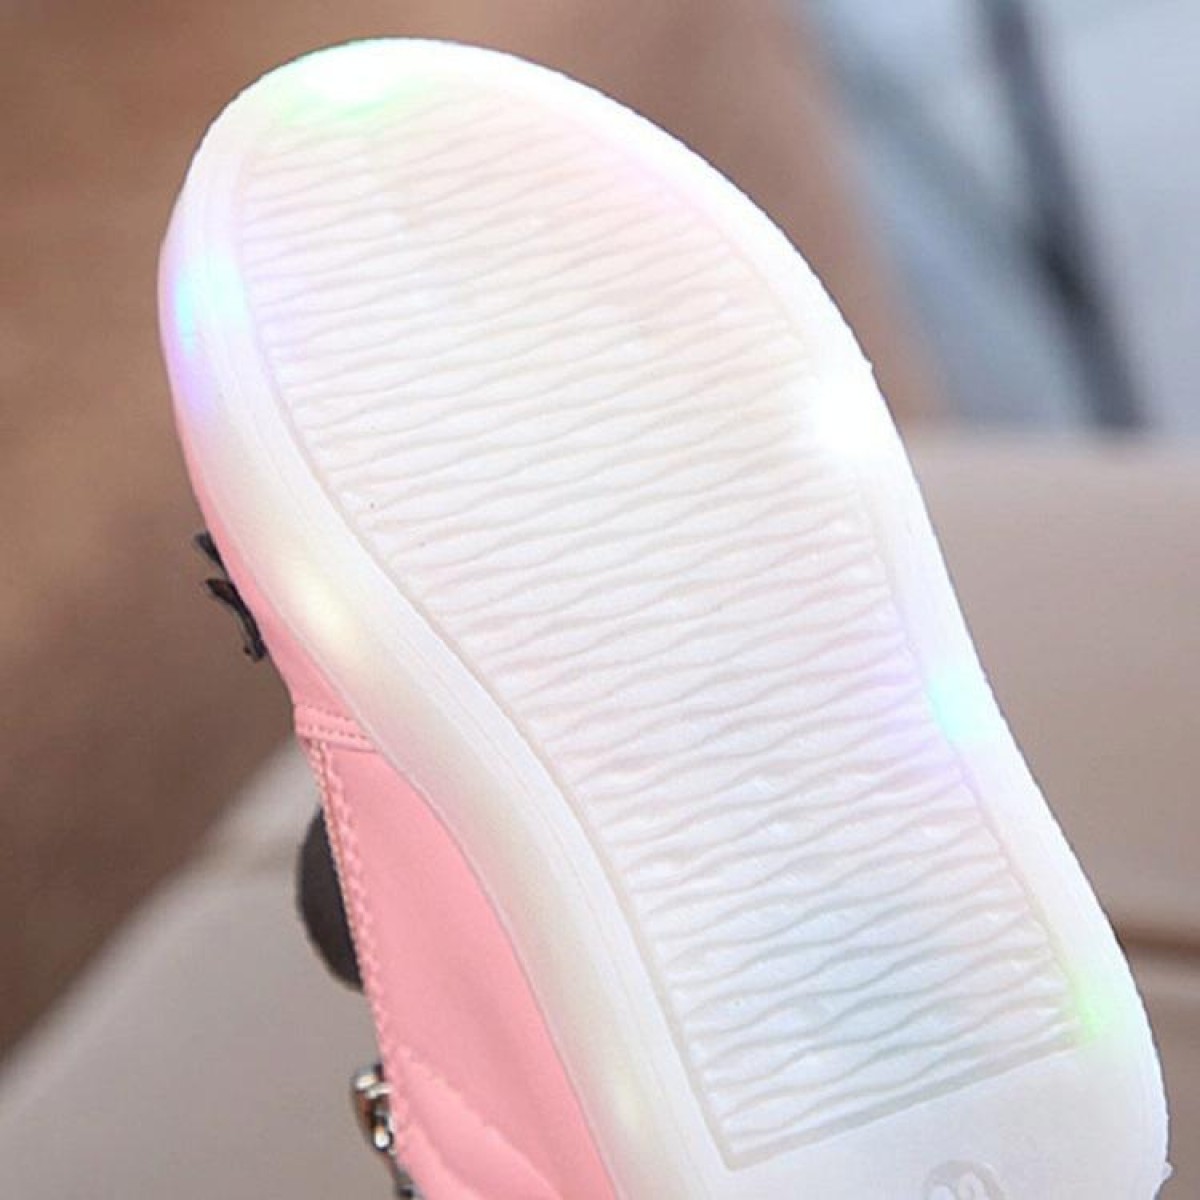 Kids Shoes Baby Infant Girls Eyelash Crystal Bowknot LED Luminous Boots Shoes Sneakers, Size:21(White)